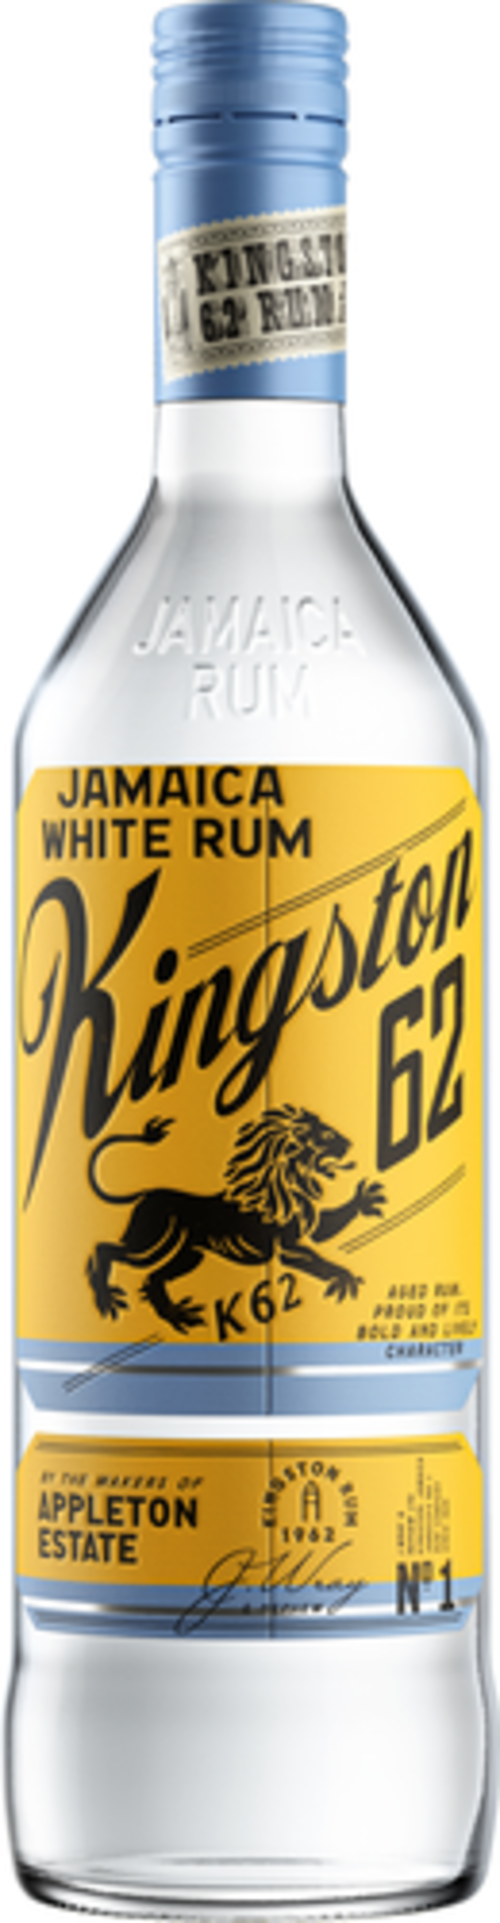 Rượu Kingston 62 Jamaica White Rum 40% 1x0.75L